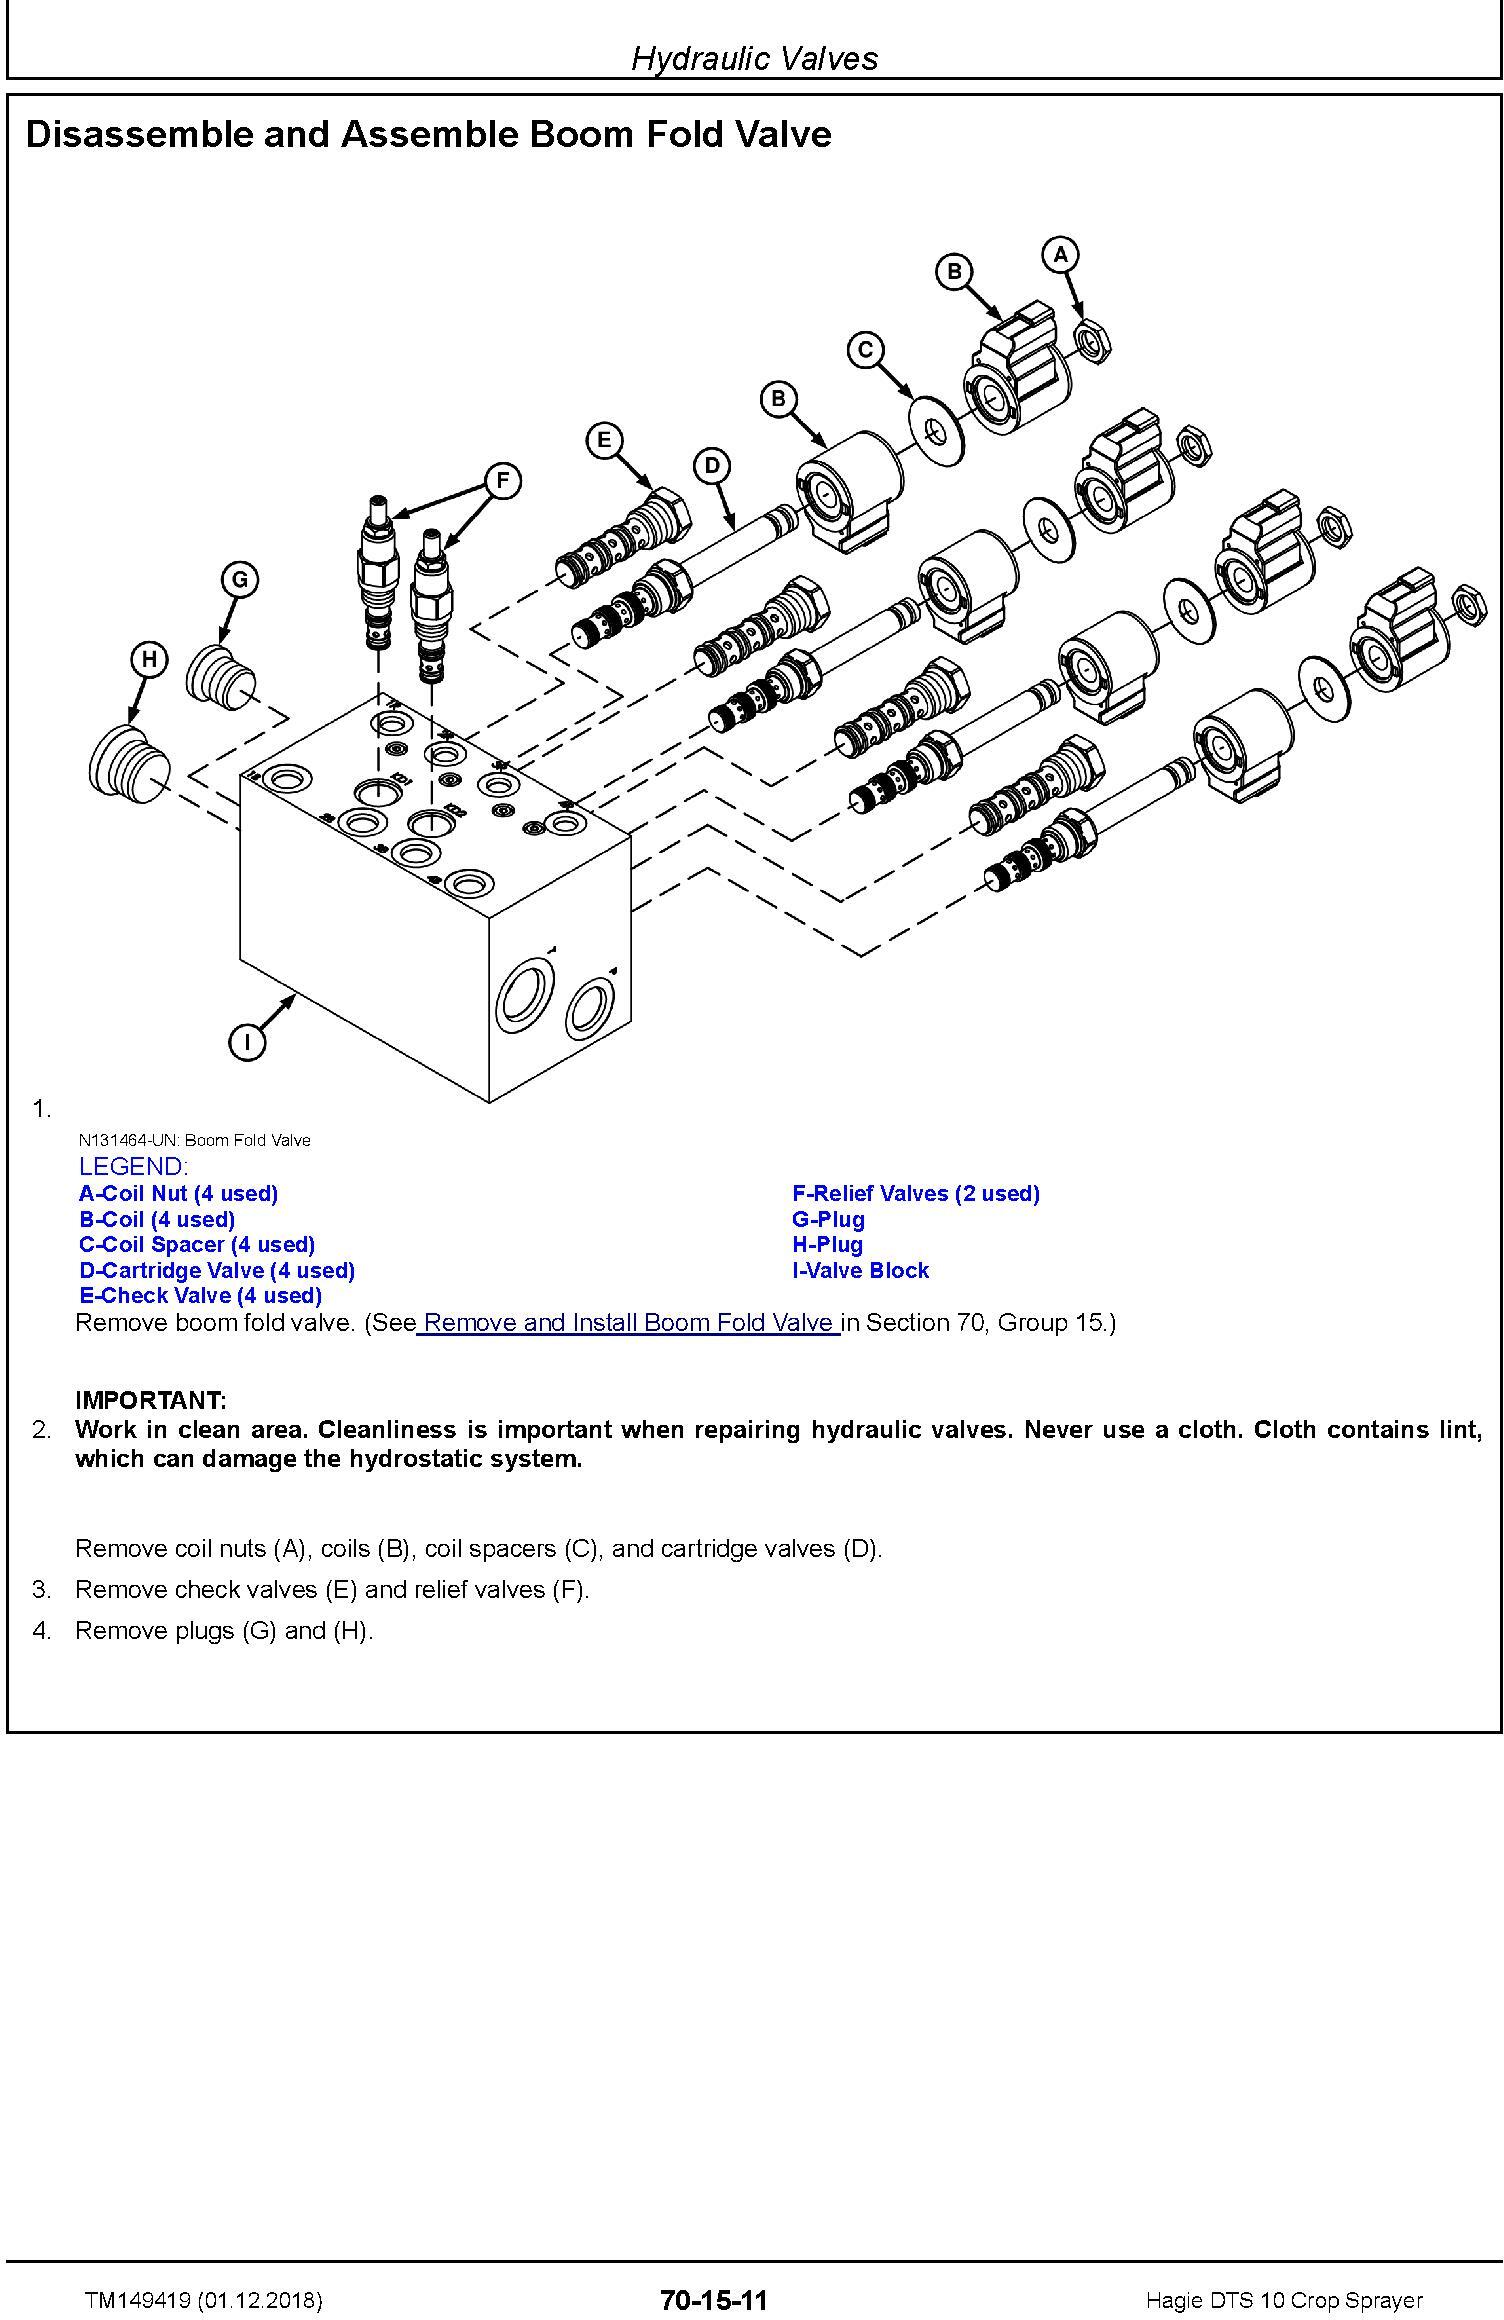 Hagie DTS 10 Crop Sprayer Repair Technical Manual (TM149419) - 3